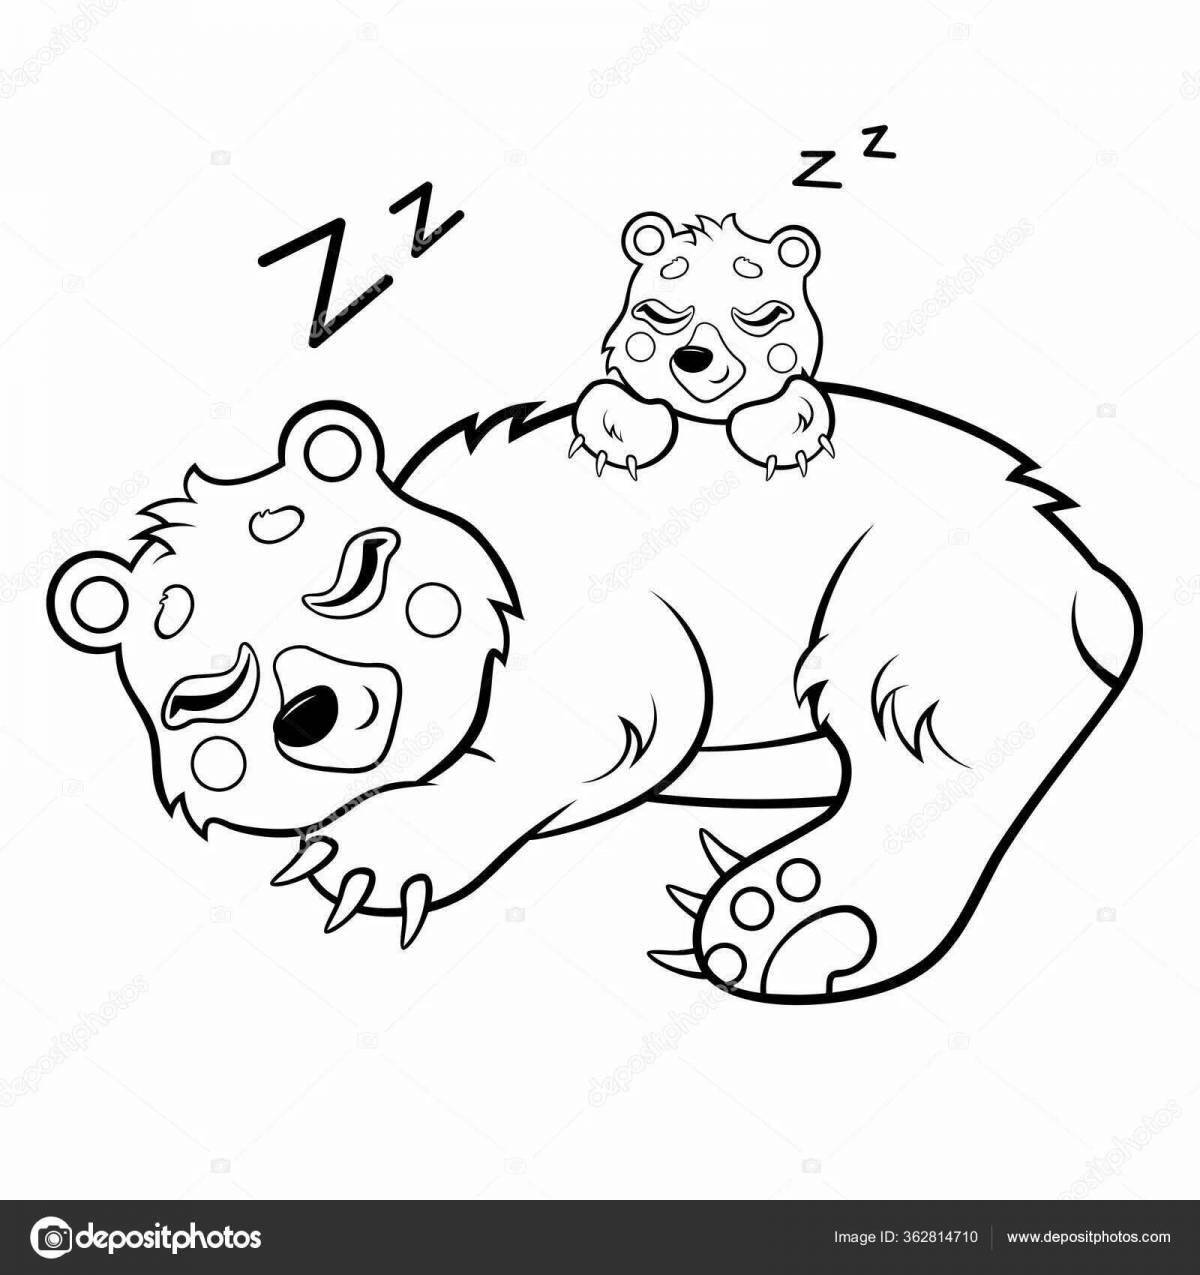 Playful sleeping bear coloring book for kids